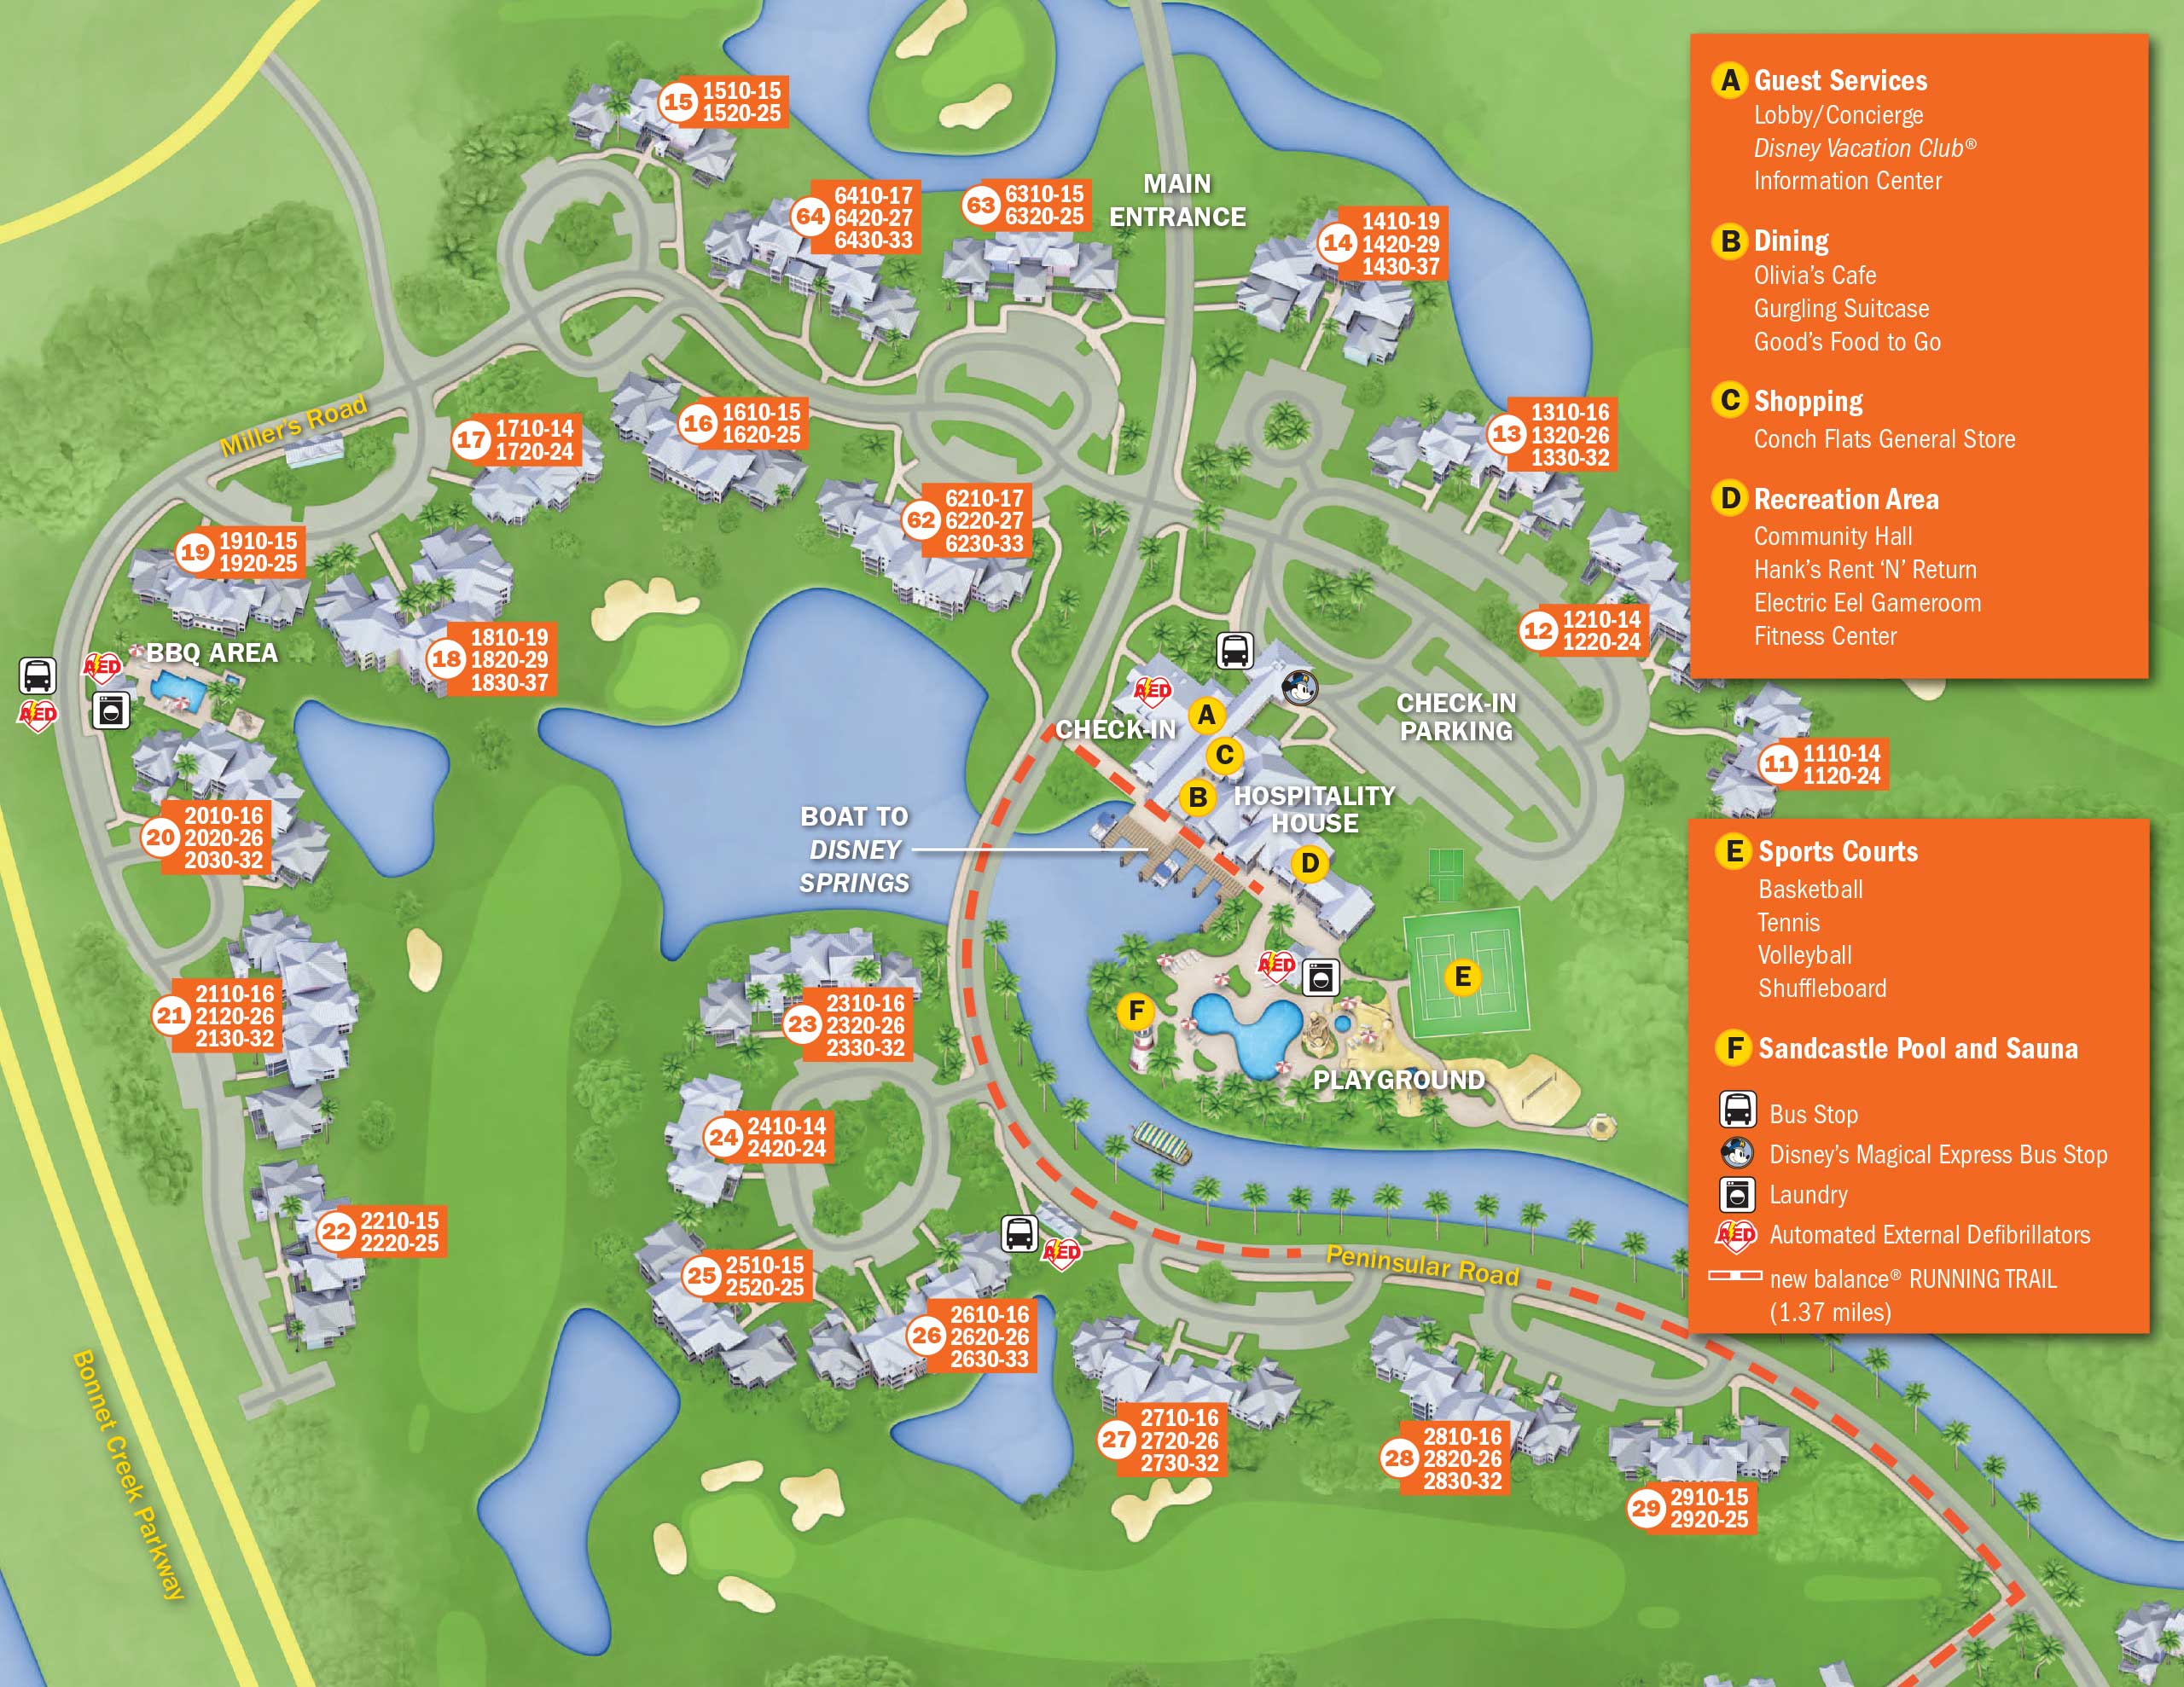 disney world map of resorts April 2017 Walt Disney World Resort Hotel Maps Photo 27 Of 33 disney world map of resorts